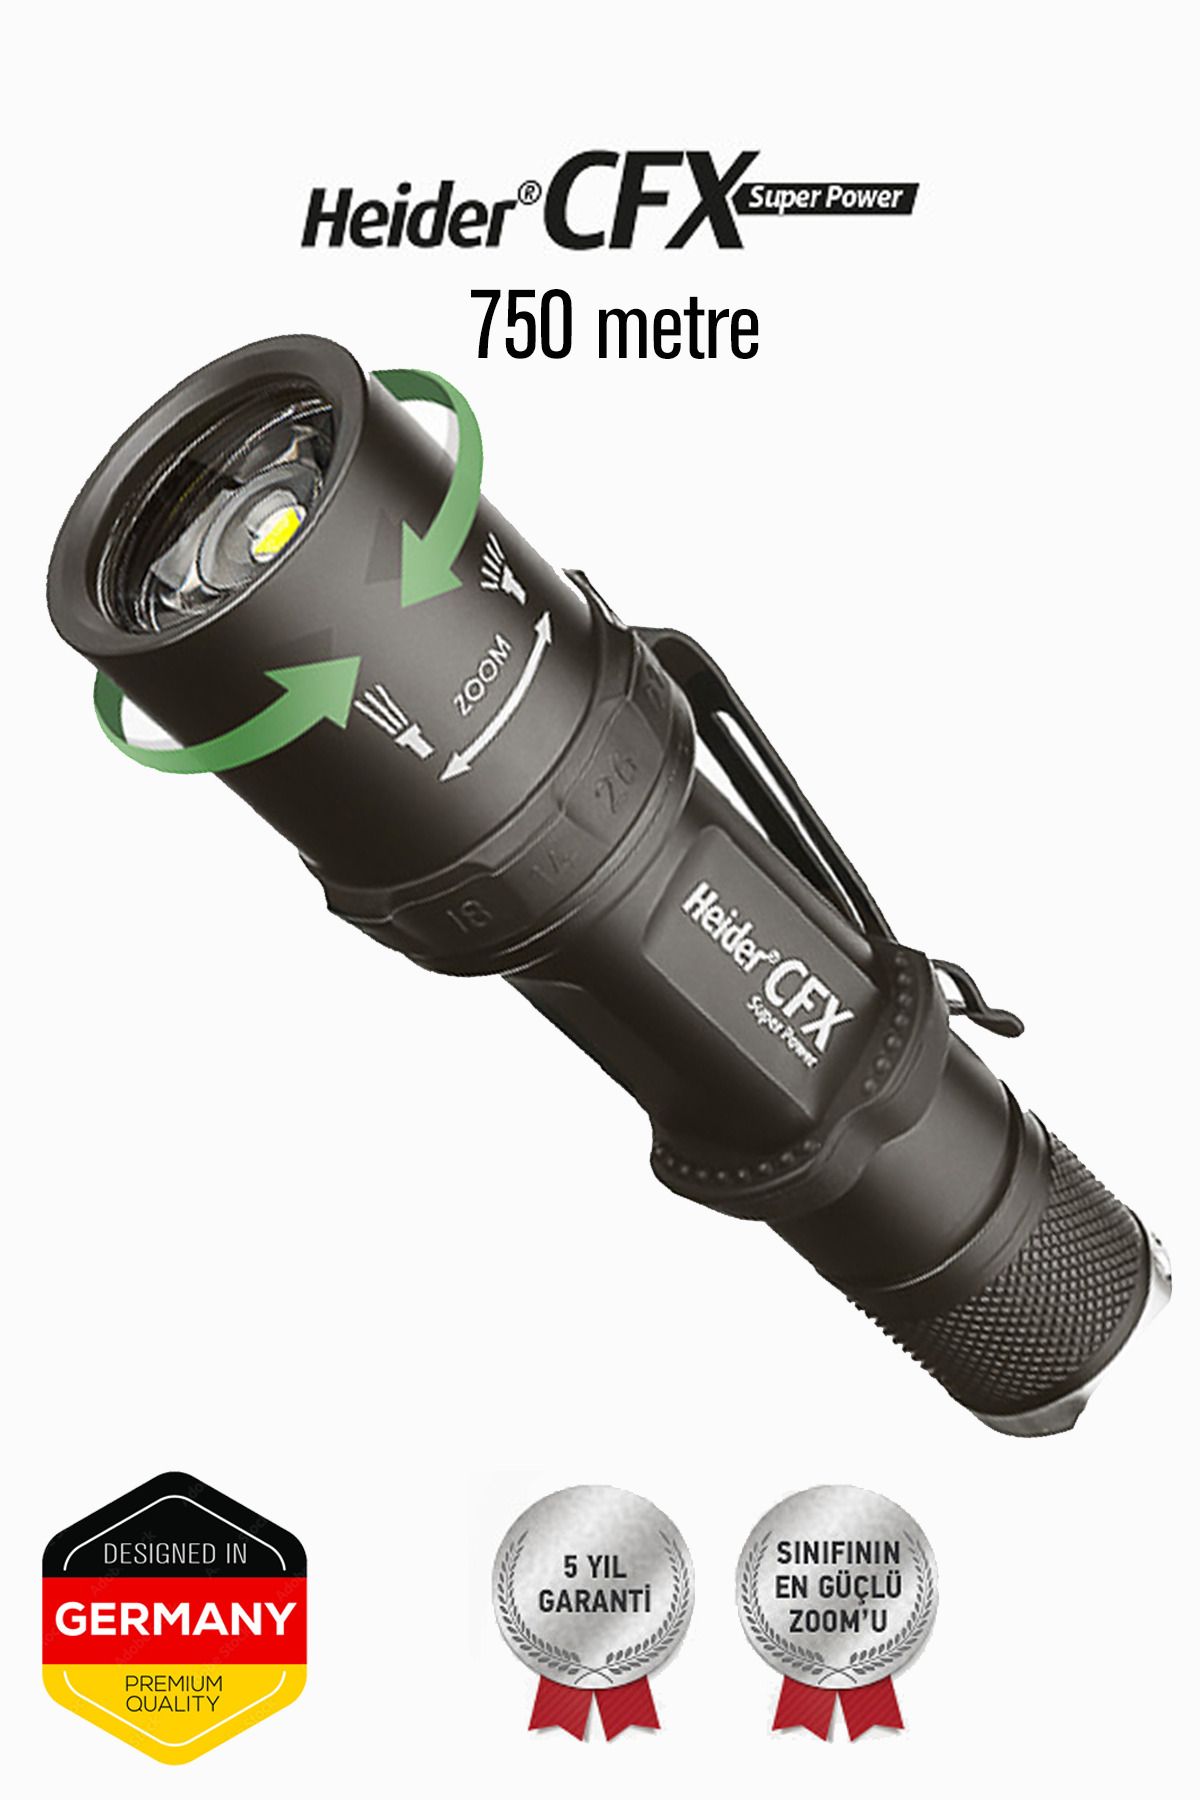 Heider CFX Super Power - 750m Mesafeli Zoom El Feneri - TIR Lens- Altın Kaplama İç Parçalar